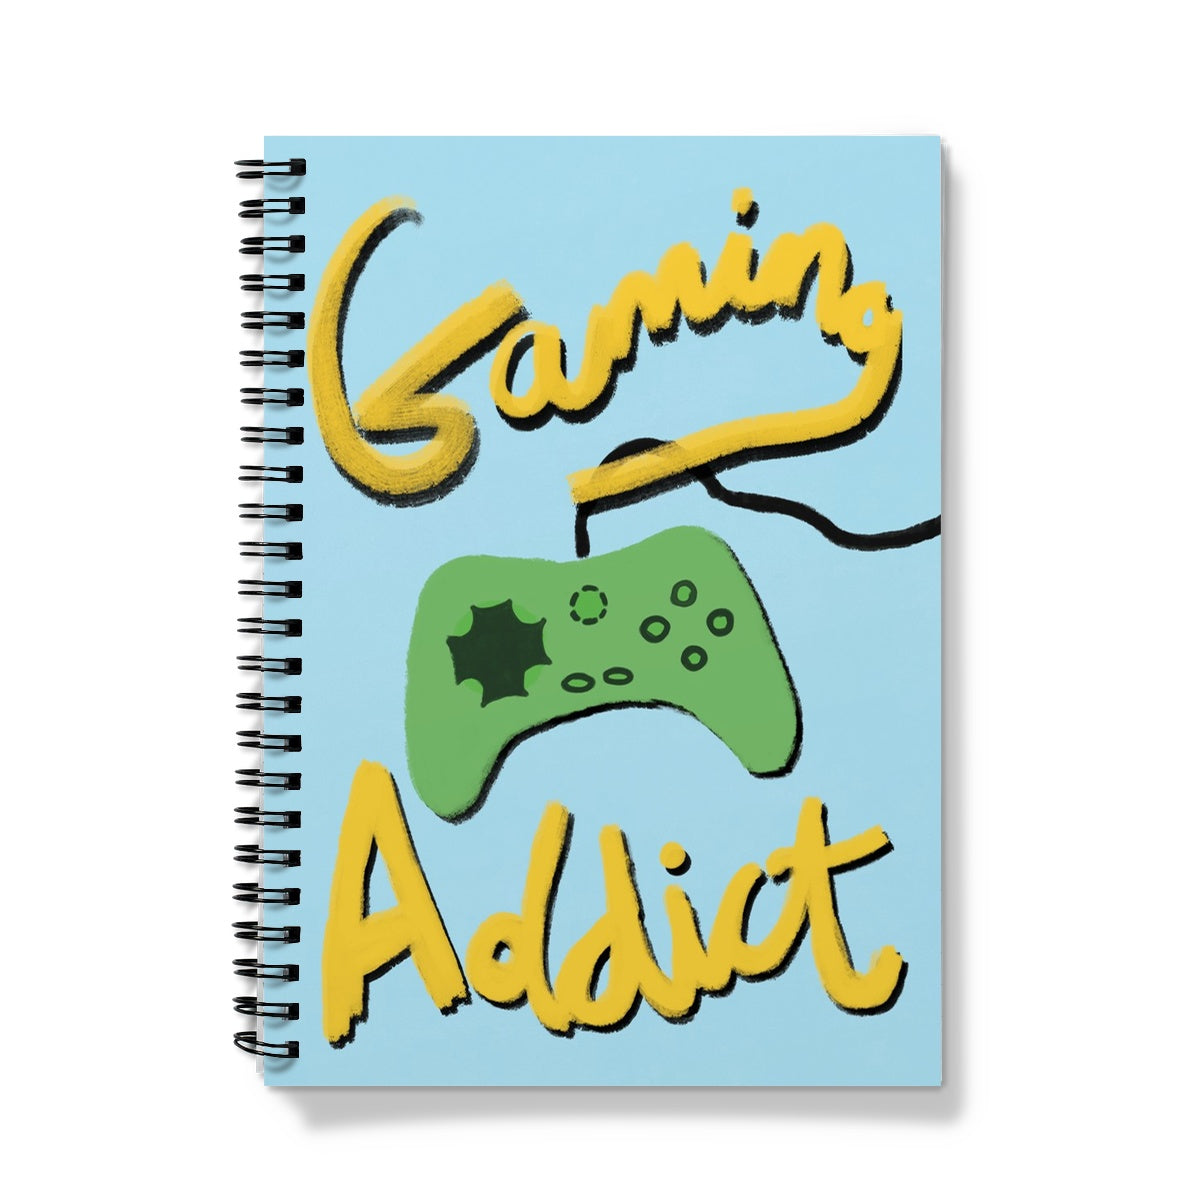 Gaming Addict Print - Light Blue, Yellow, Green Notebook